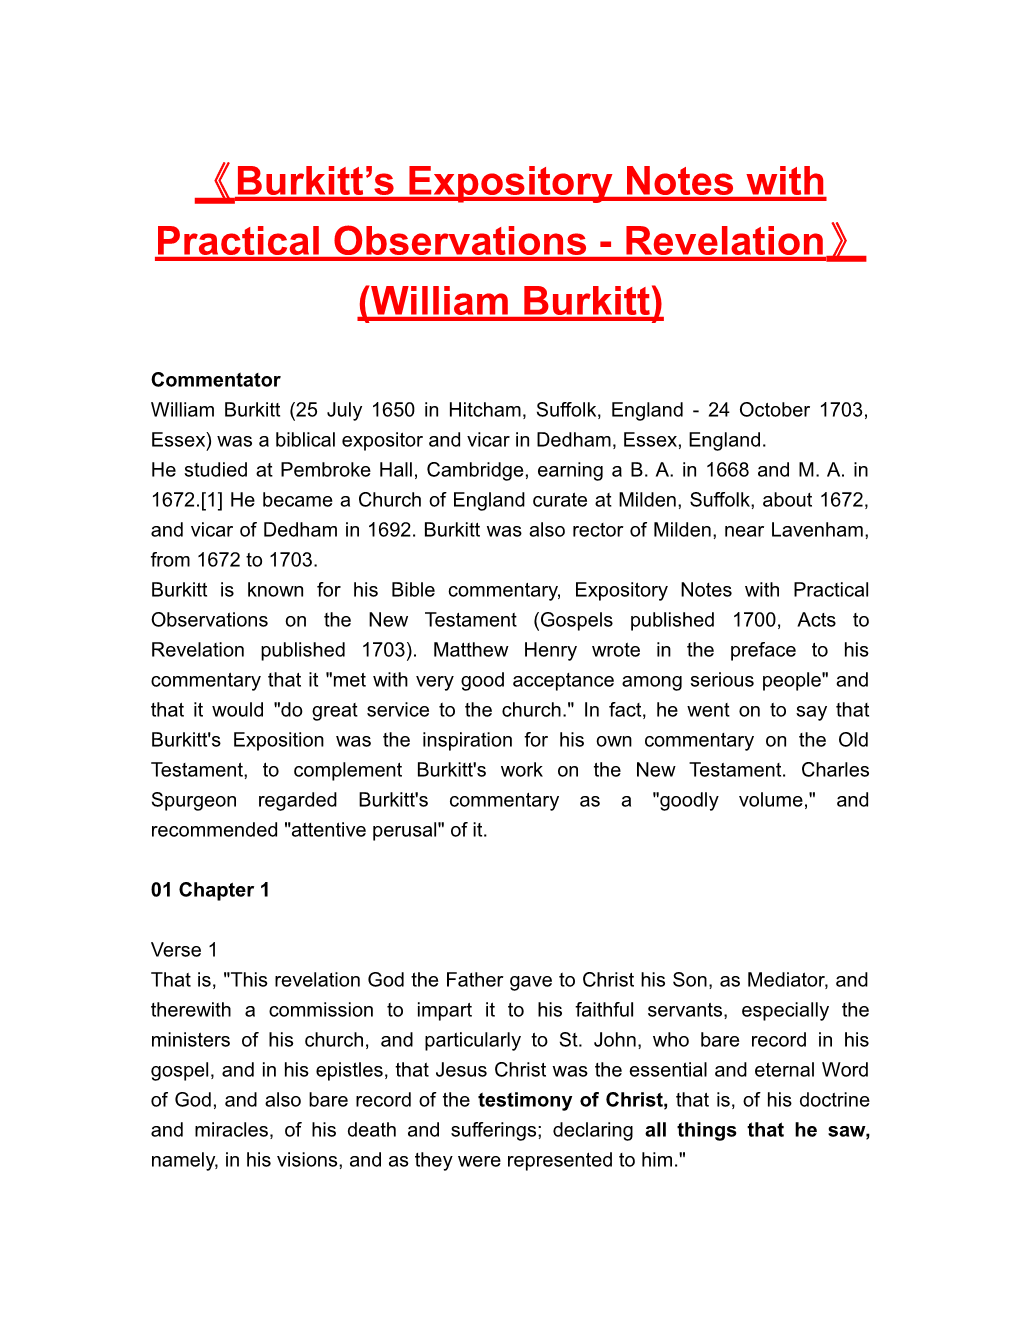 Burkitt S Expository Notes with Practical Observations-Revelation (William Burkitt)